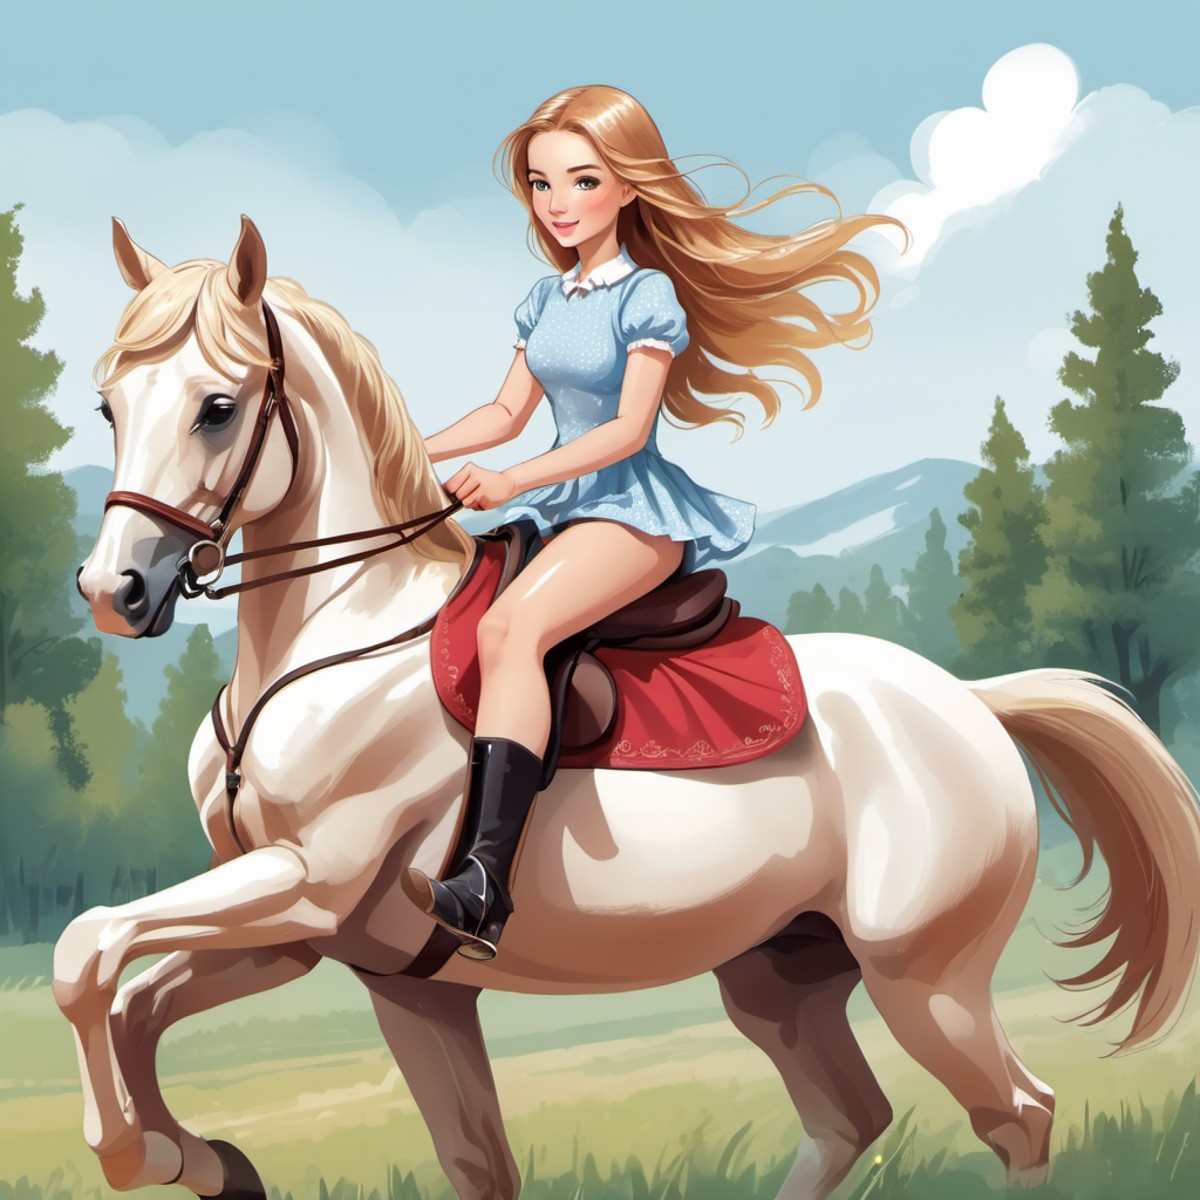 a pretty girl riding a horse, illustration